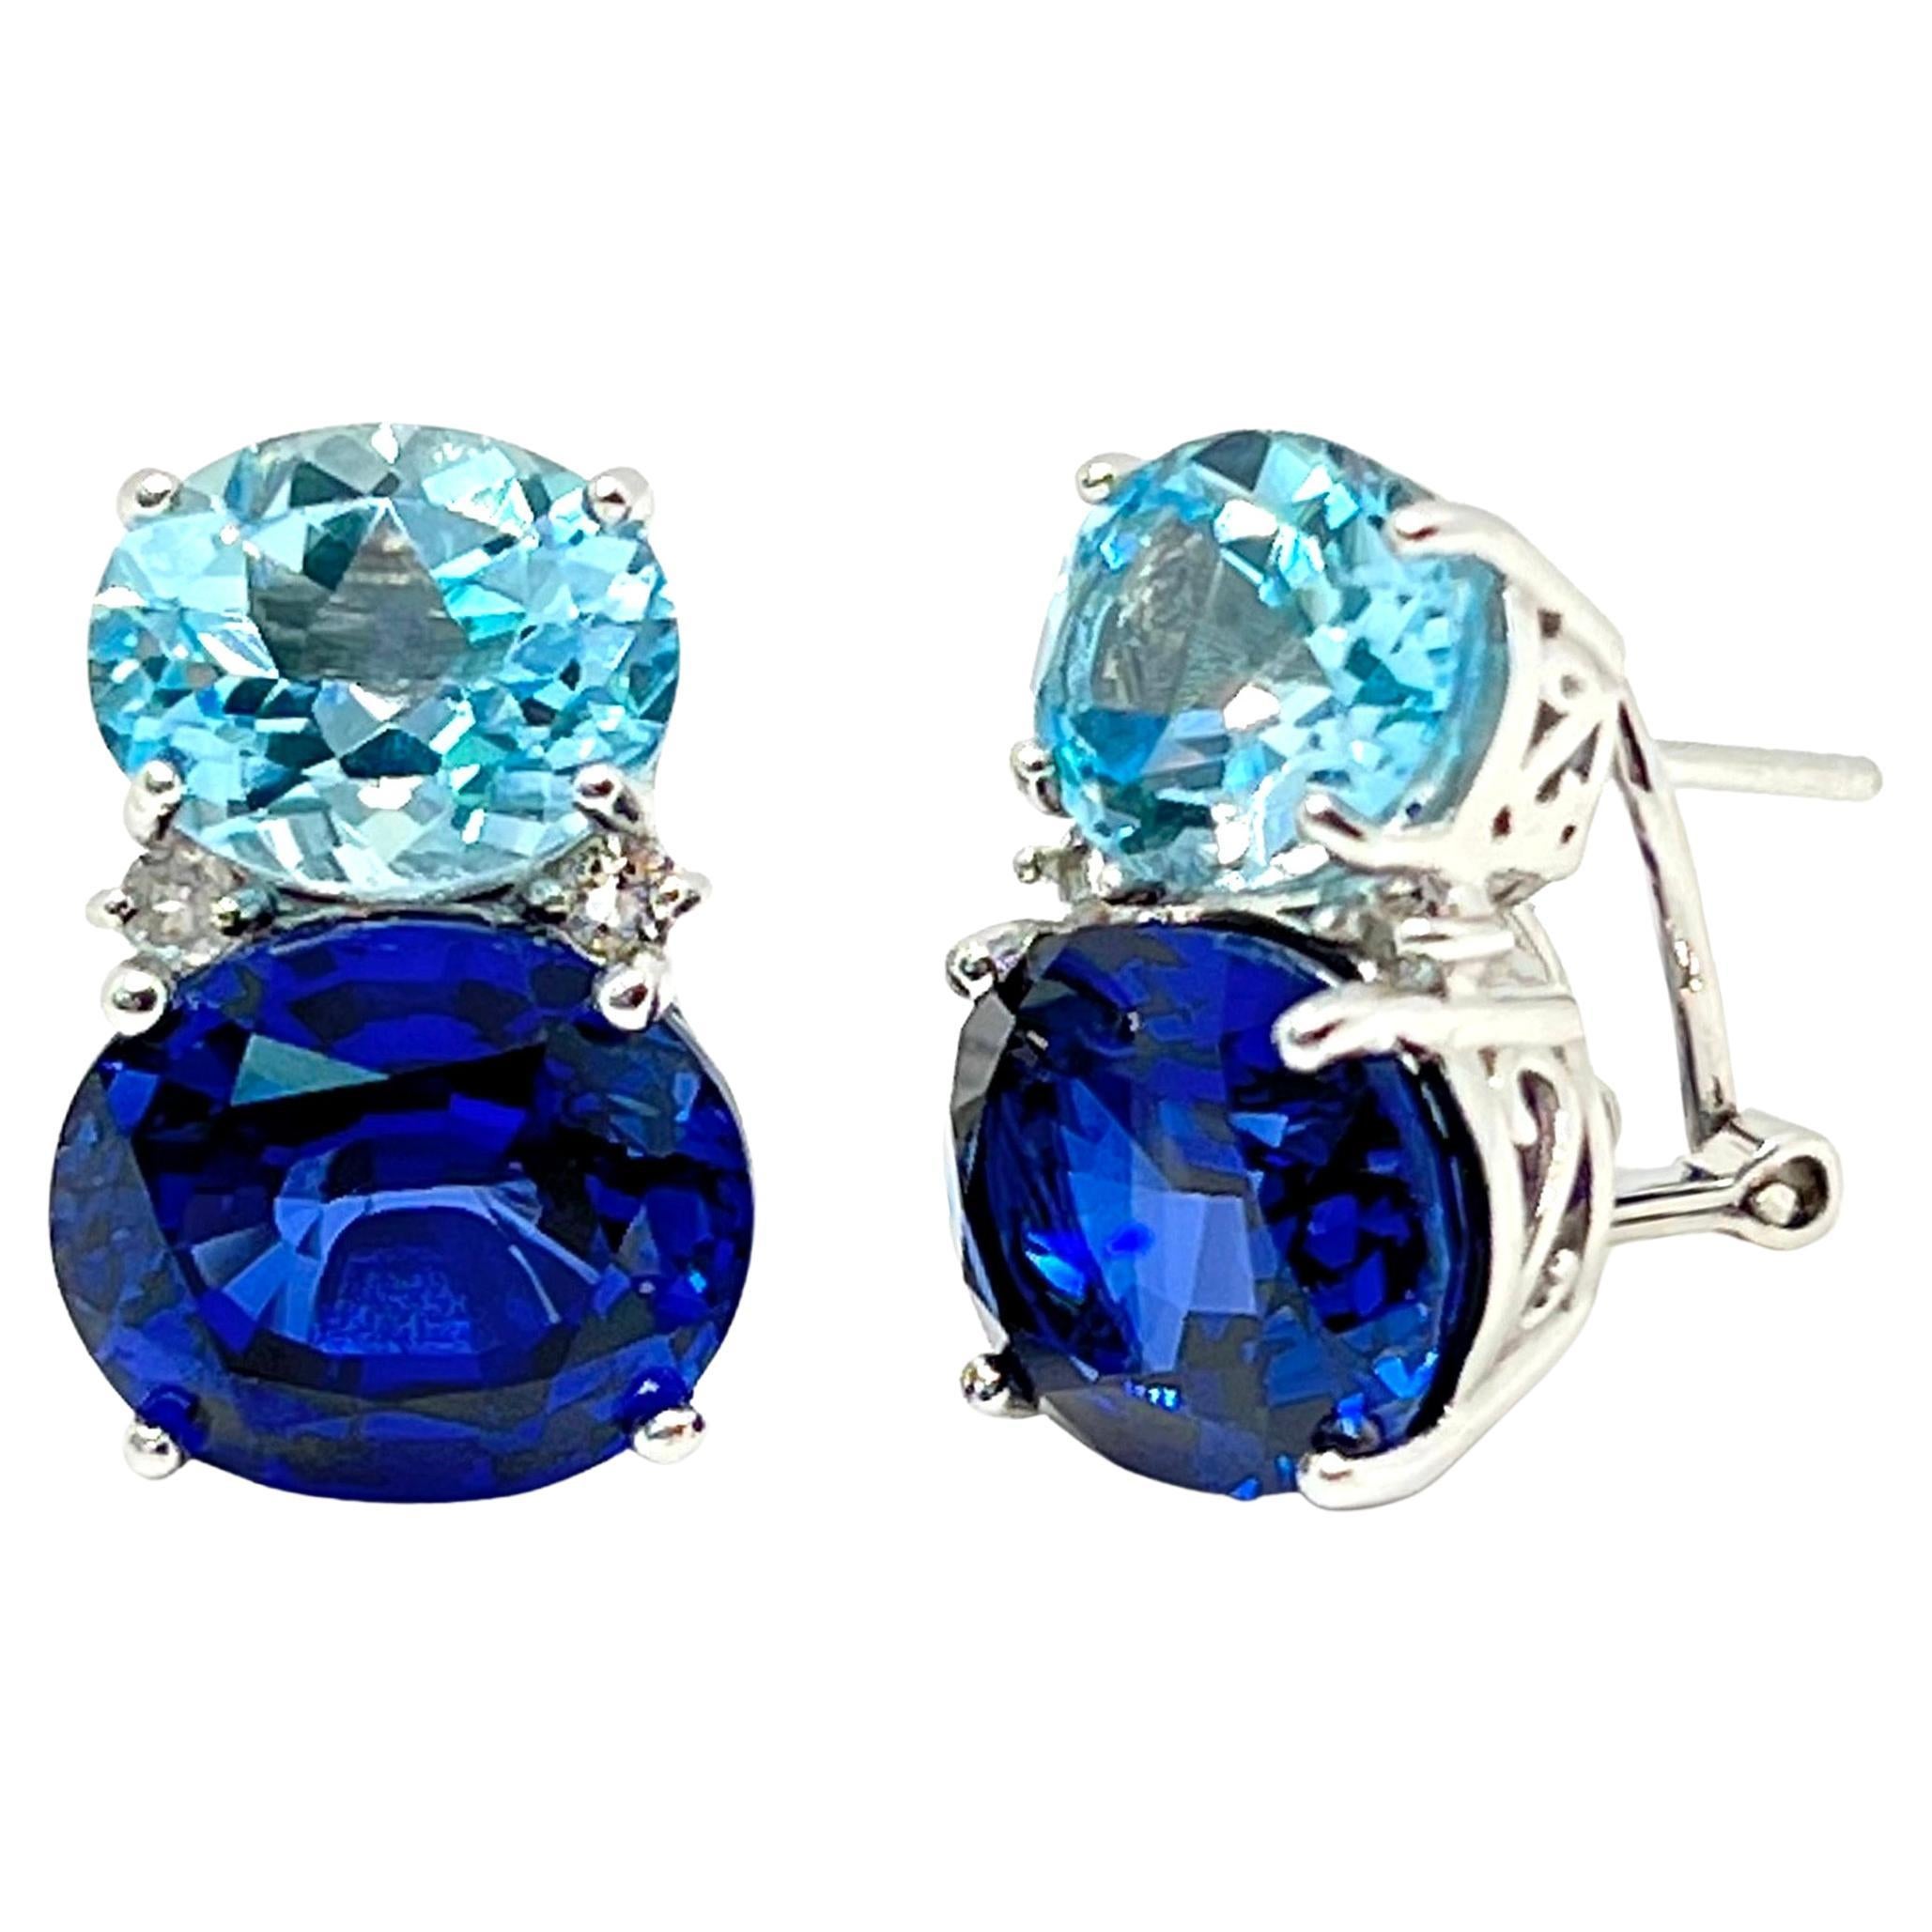 Stunning Double Oval Blue Topaz & Sapphire Earrings